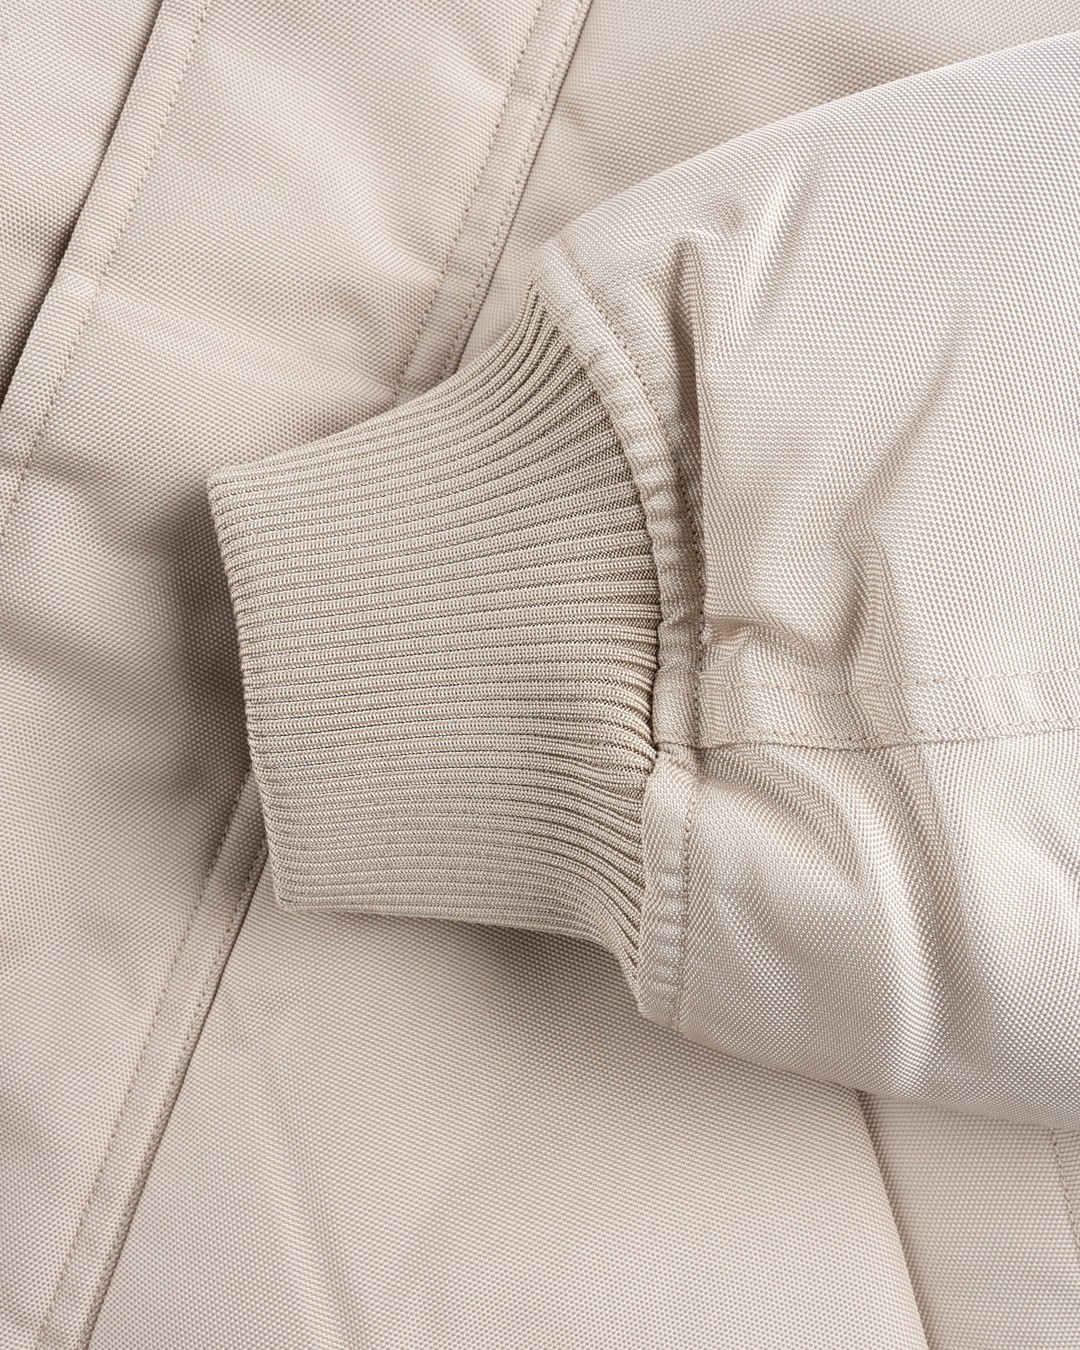 Acne Studios – Shearling Collar Jacket Beige - Outerwear - Beige - Image 6